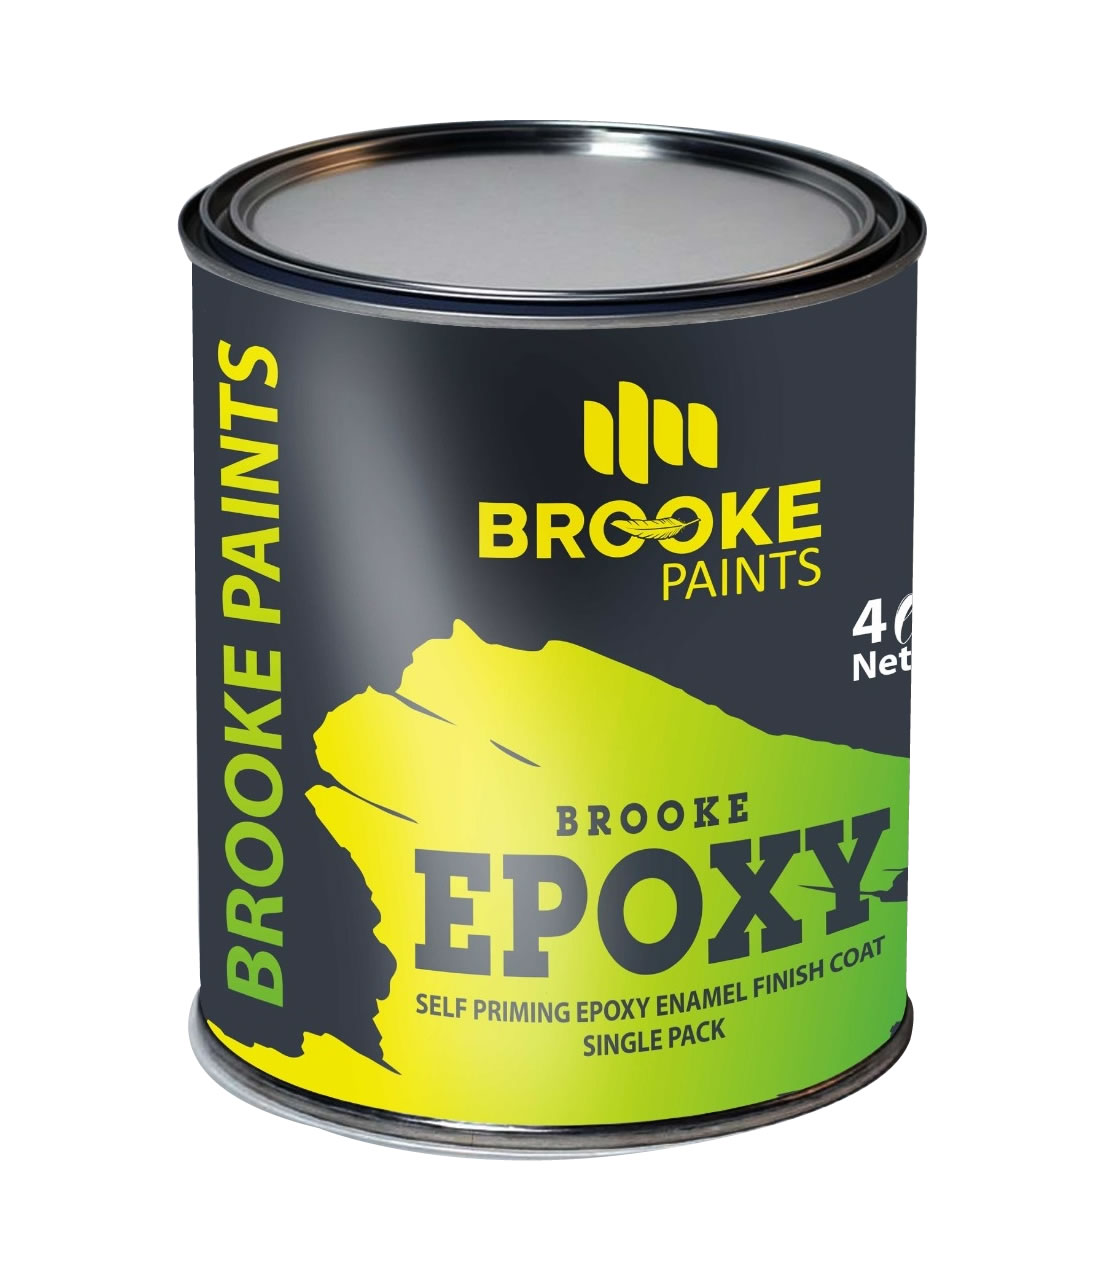 Brooke Epoxy Enamel